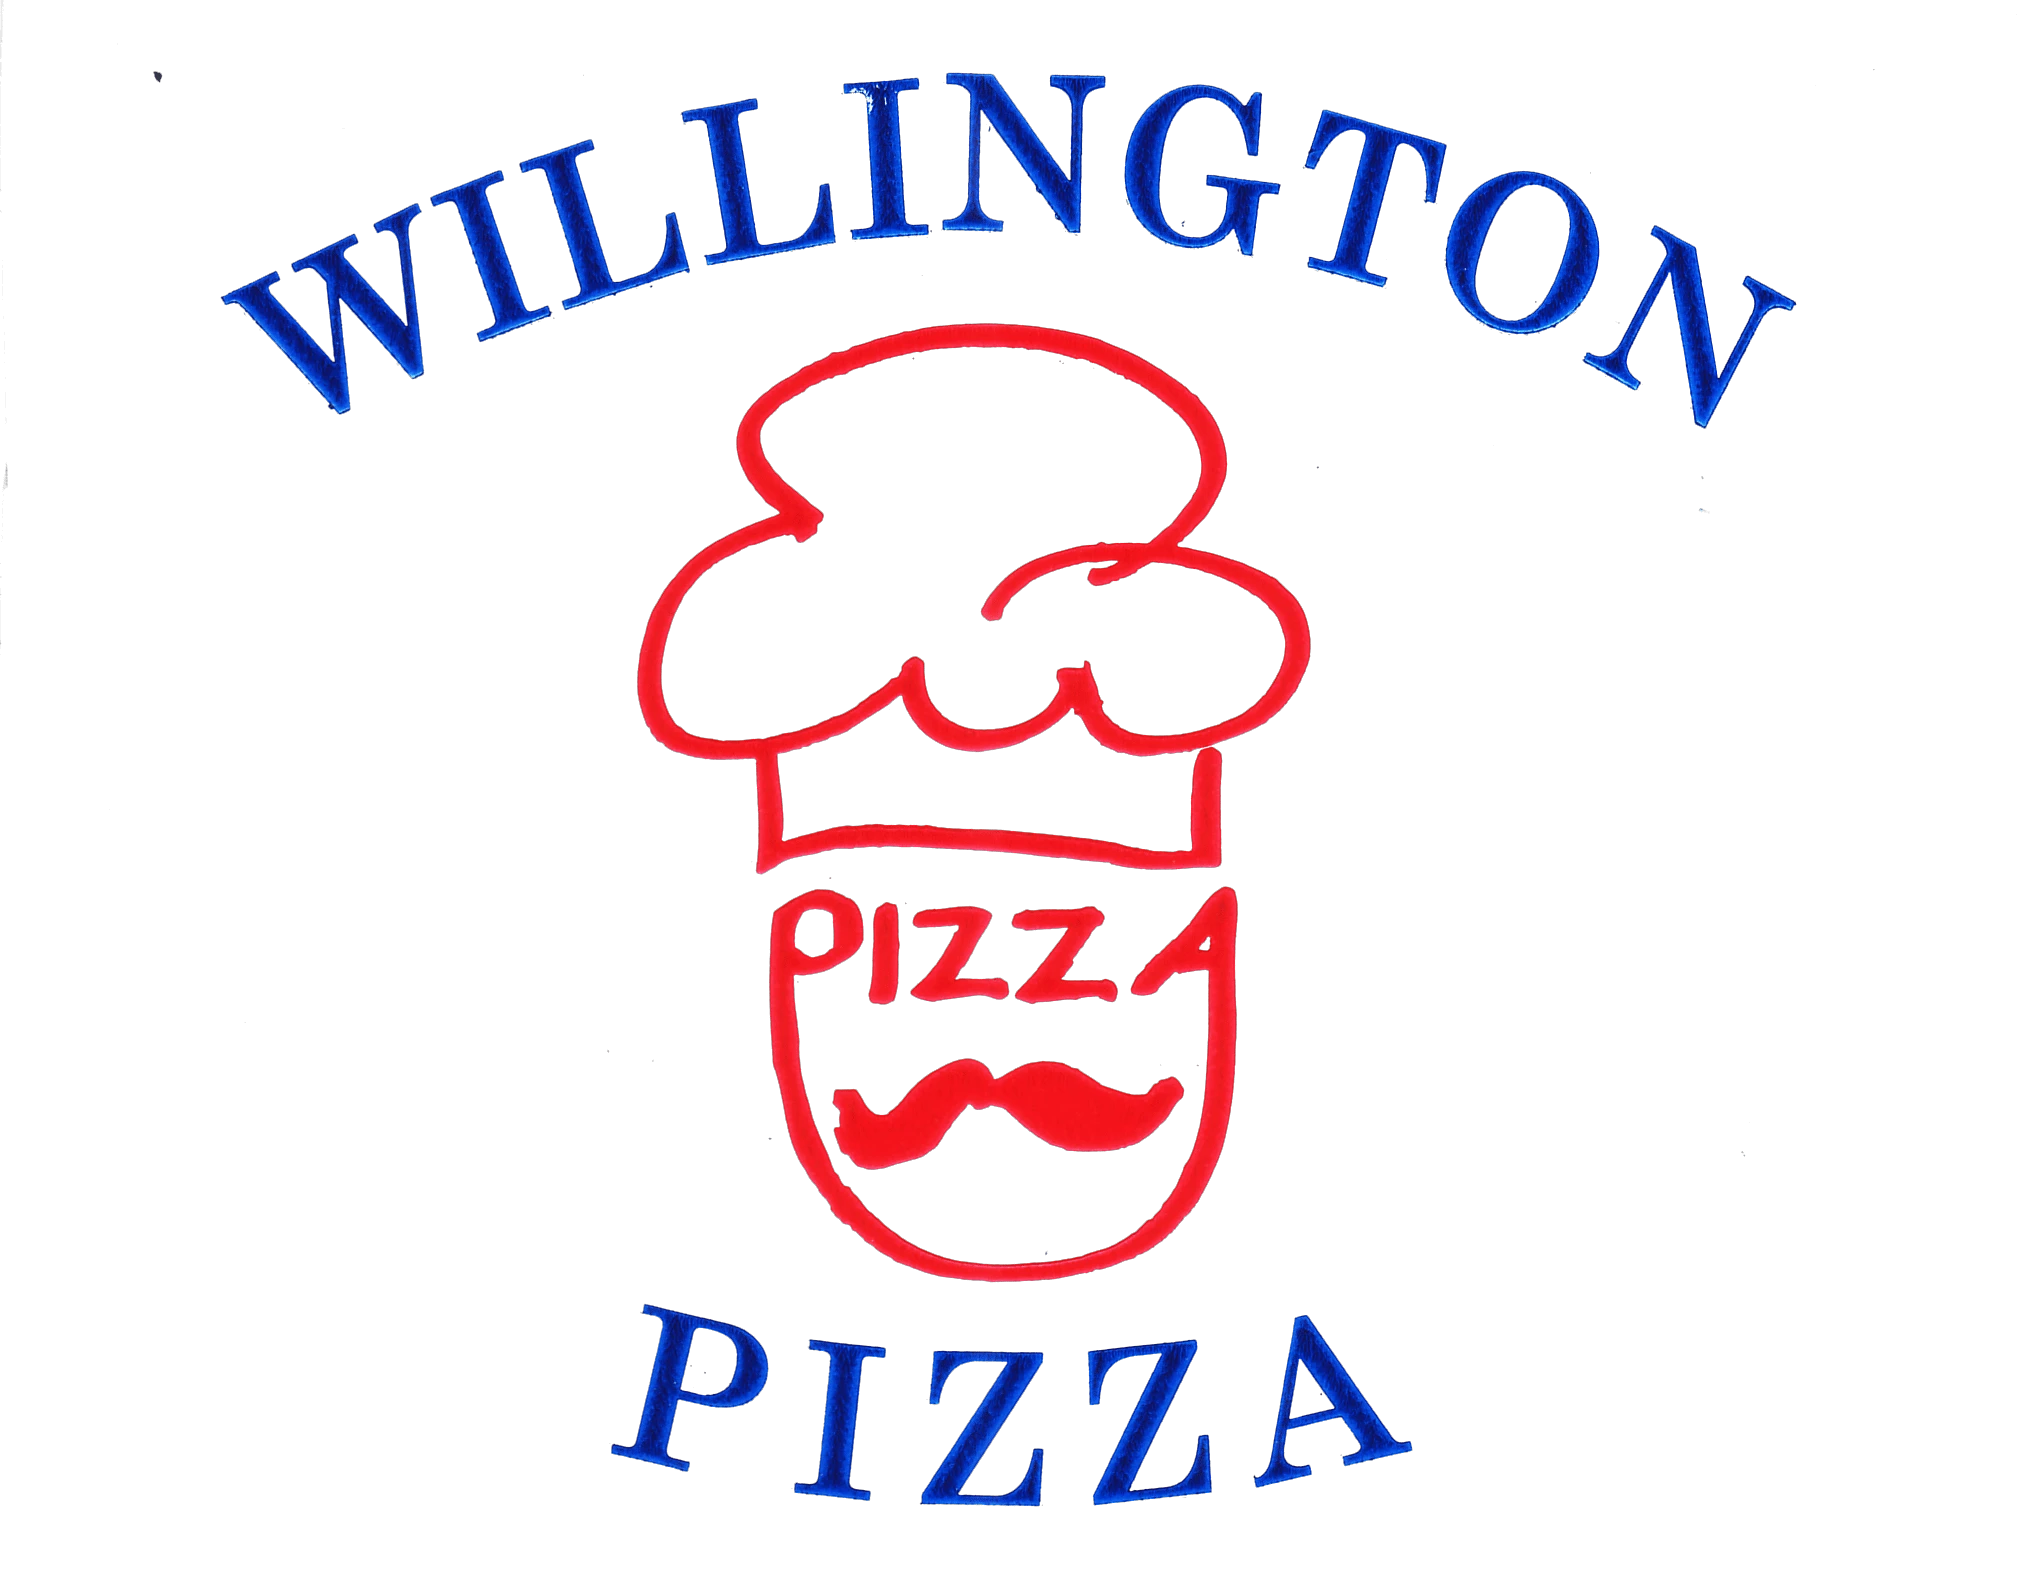 Willington Pizza promotions 